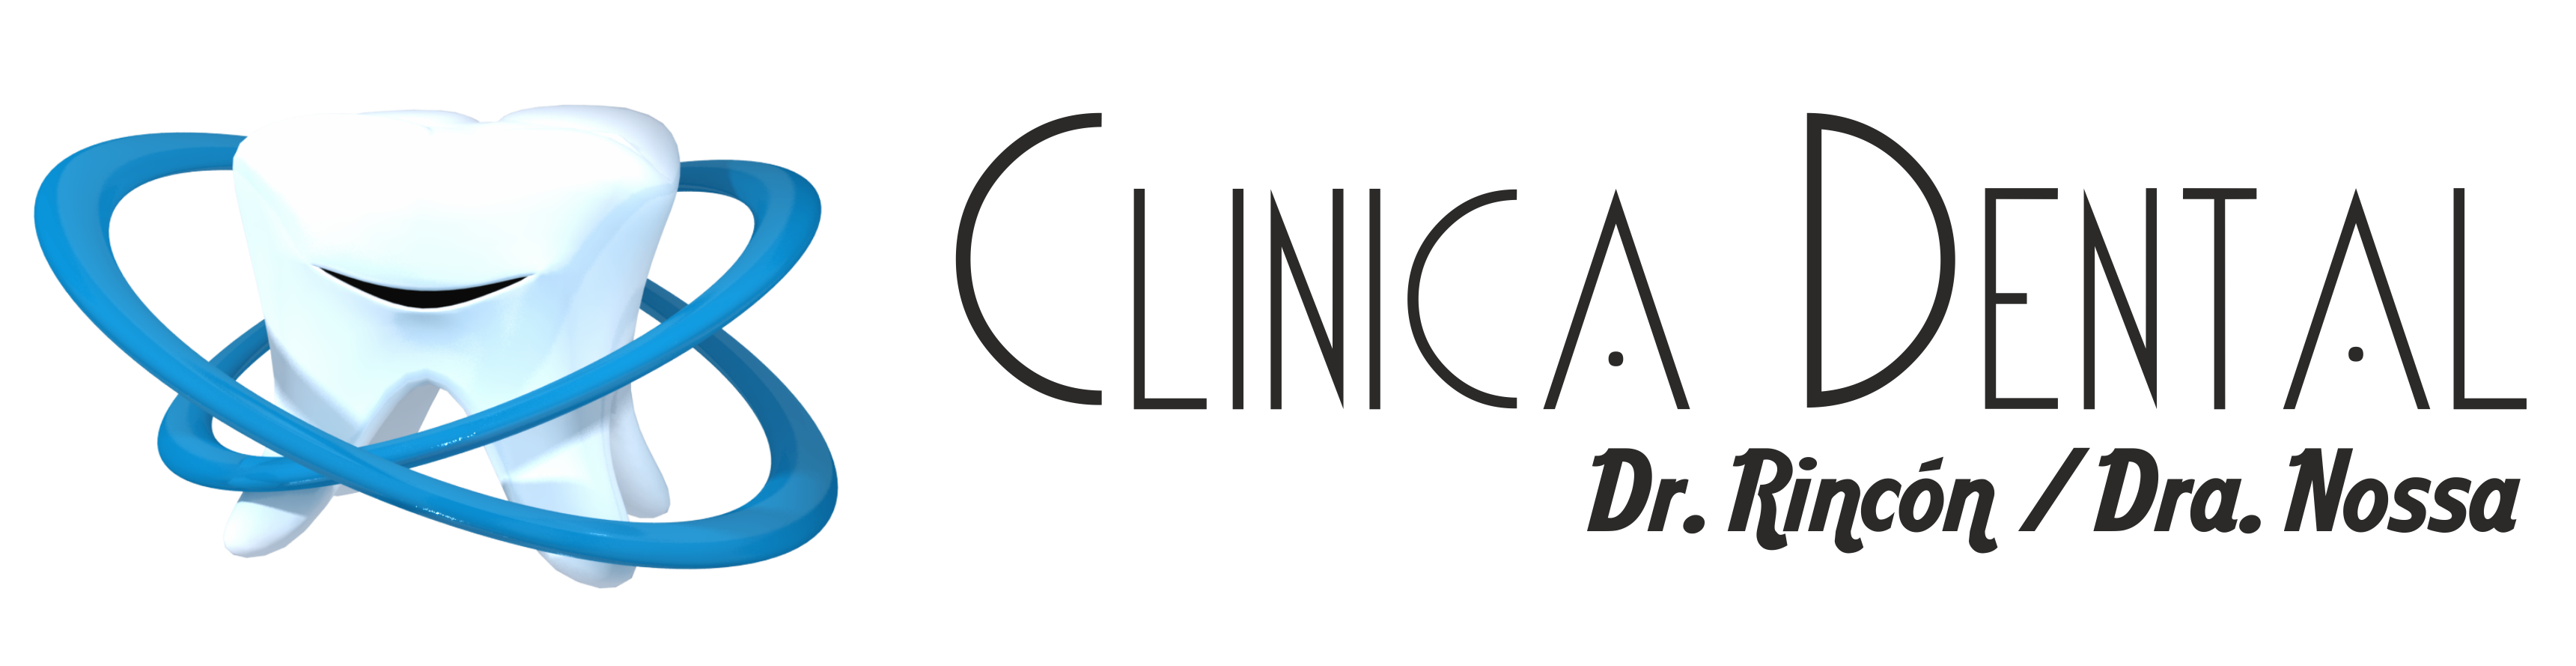 Clínica Dental – Dr. Rincón / Dra. Nossa